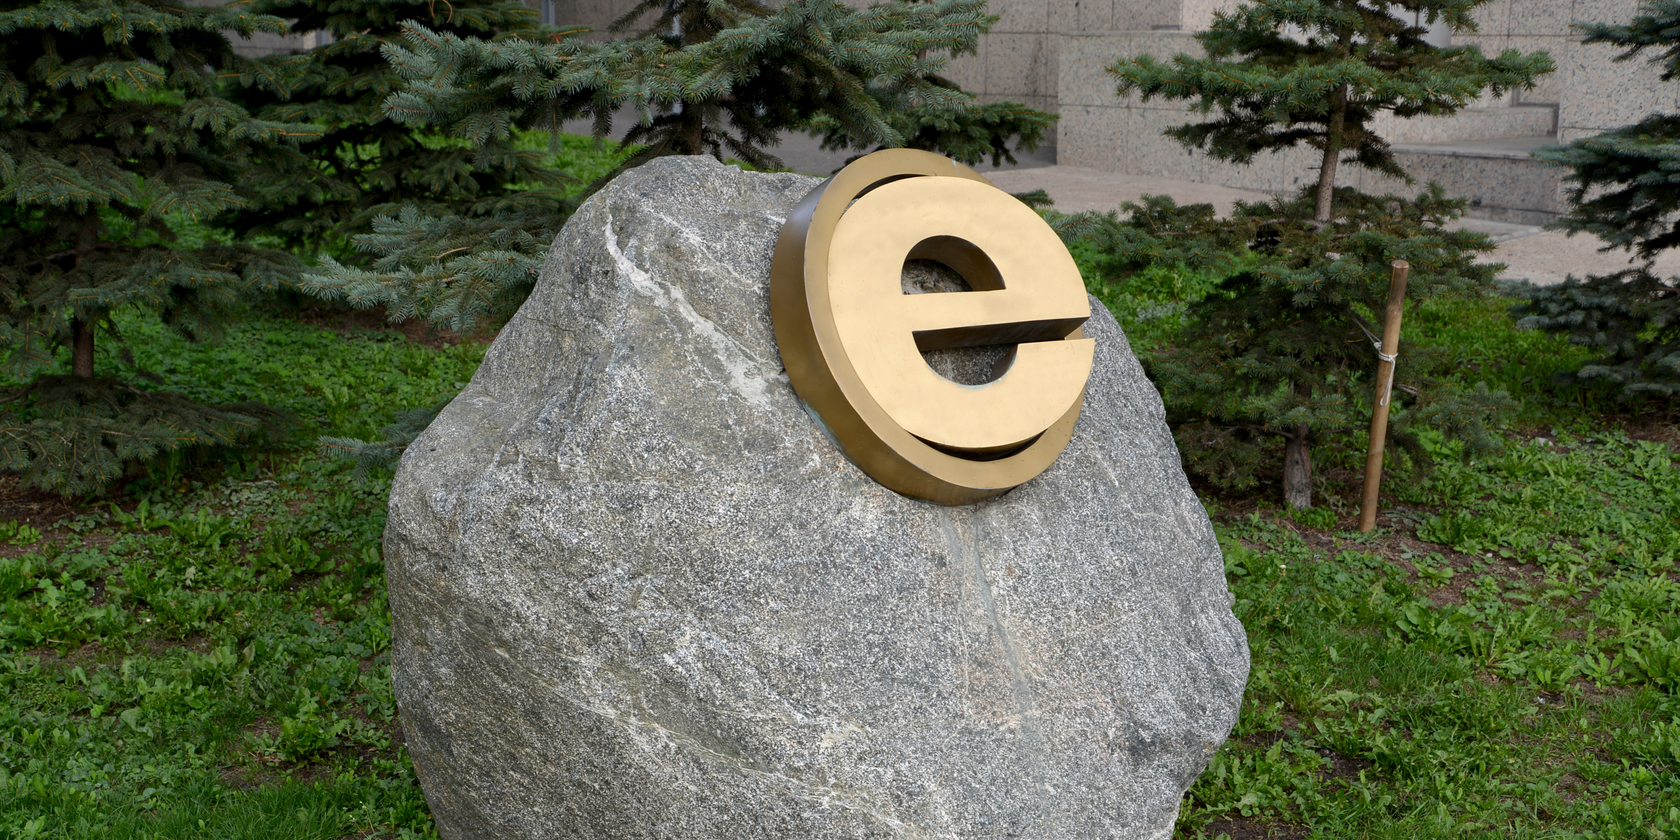 The Internet Explorer monument